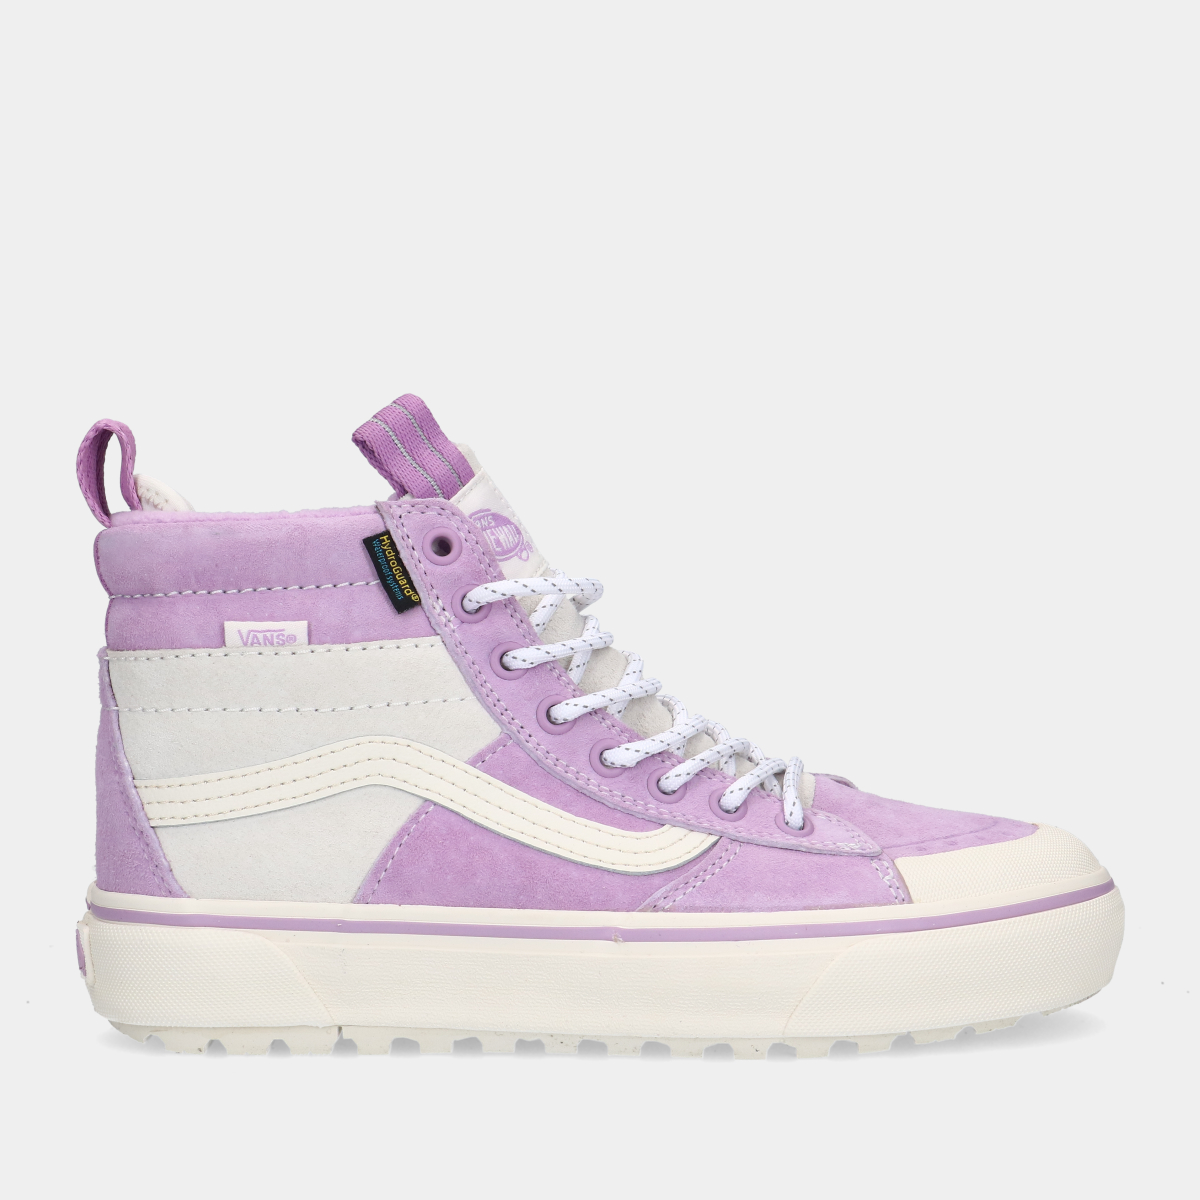 Vans Sk8-Hi Mte-2 Violet Ice Marshmallow sneakers